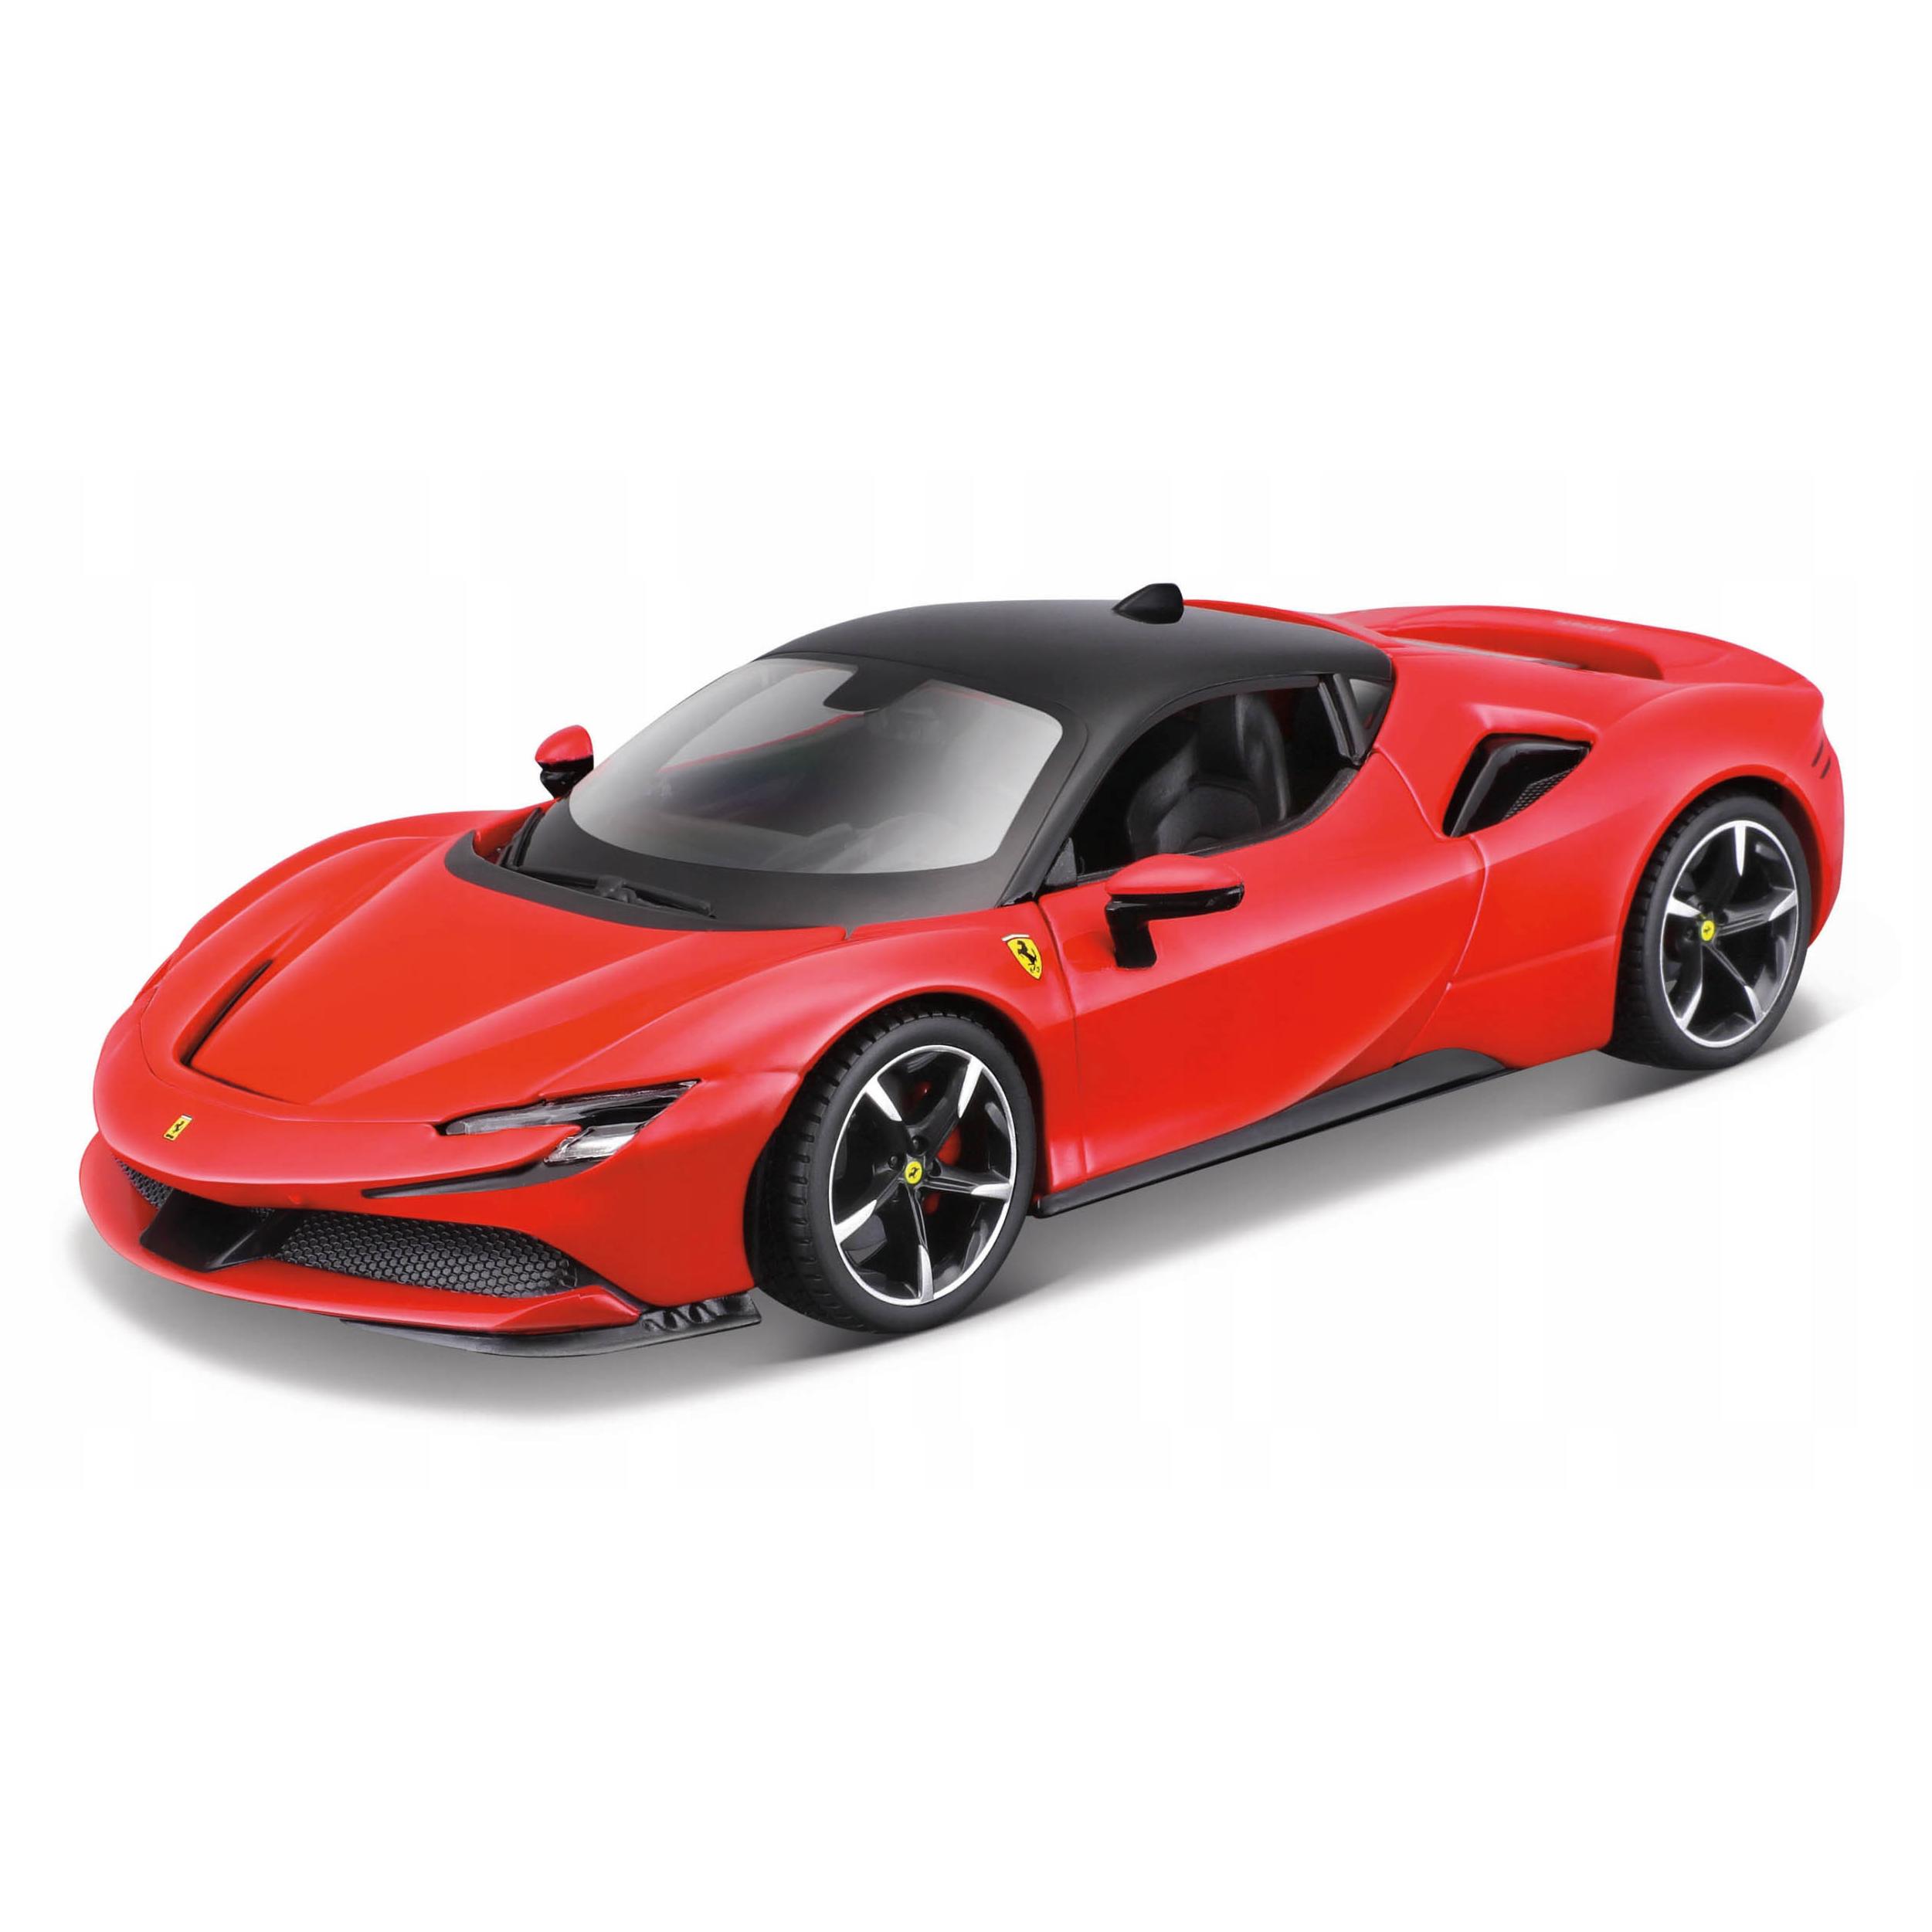 Коллекционная машинка Bburago Феррари 1:43 Ferrari SF90 Stradale,красная bburago 1 43 488 f40 599 250 458 f12 portofino 812 roma sp1 sf90 f8 246 enzo static simulation diecast alloy model car